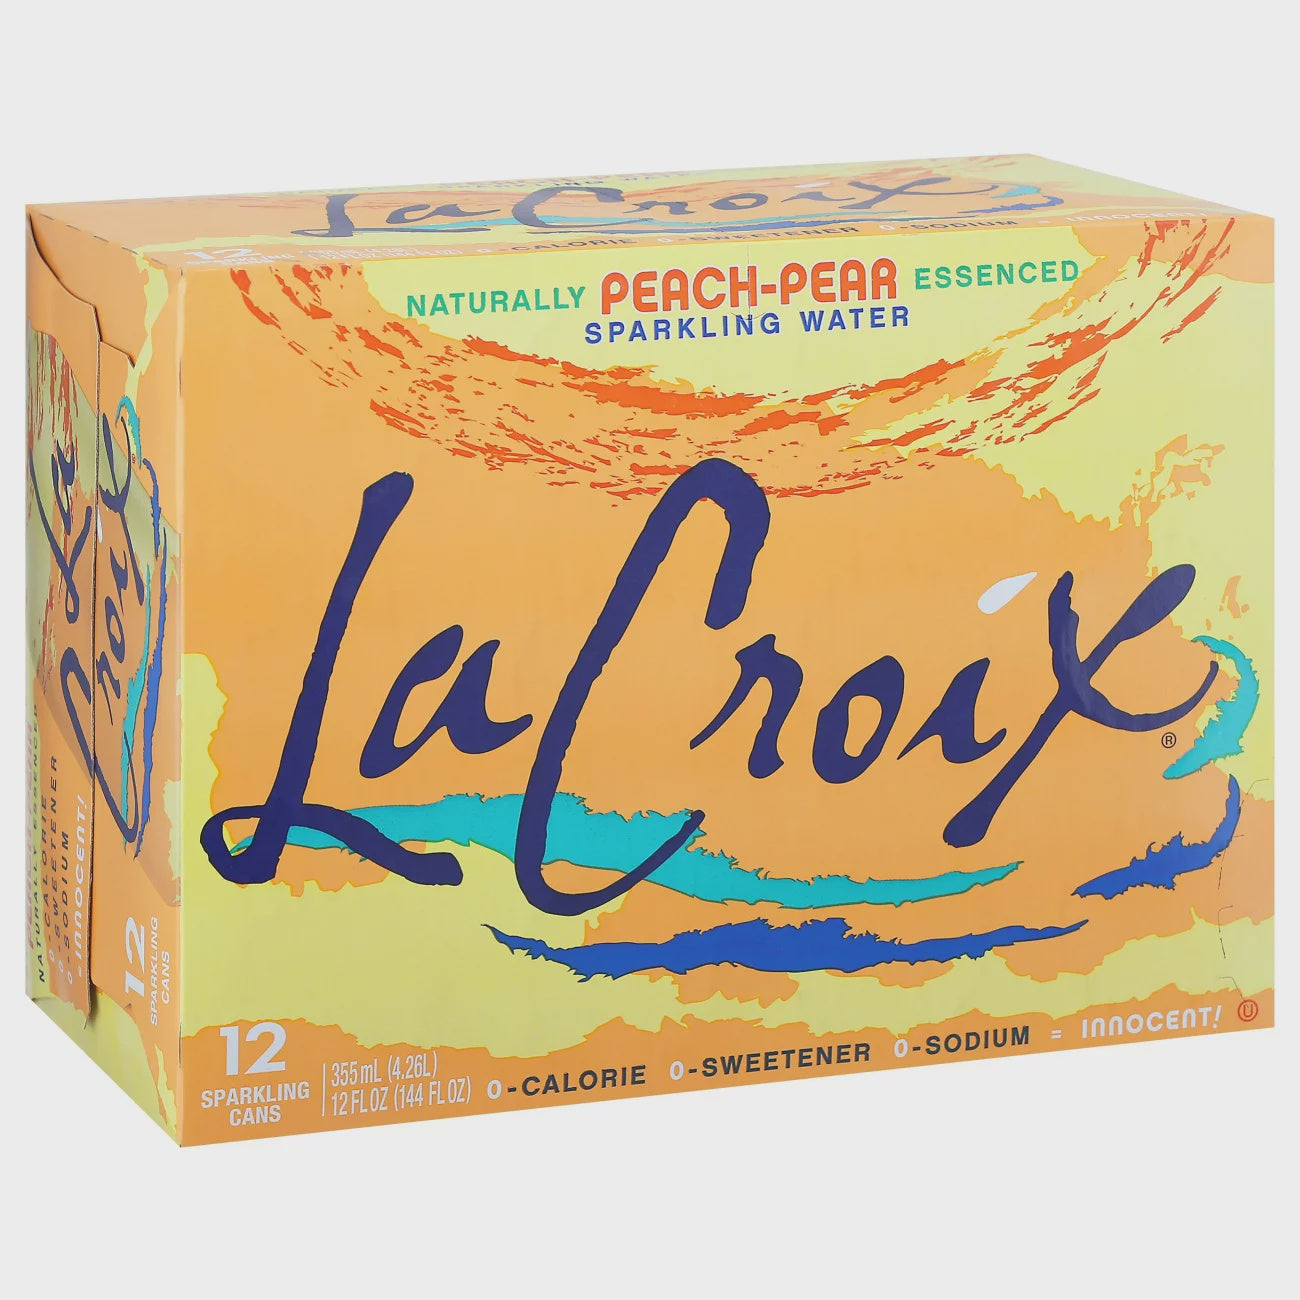 La Croix Peach Pear Sparkling Water 12 cans